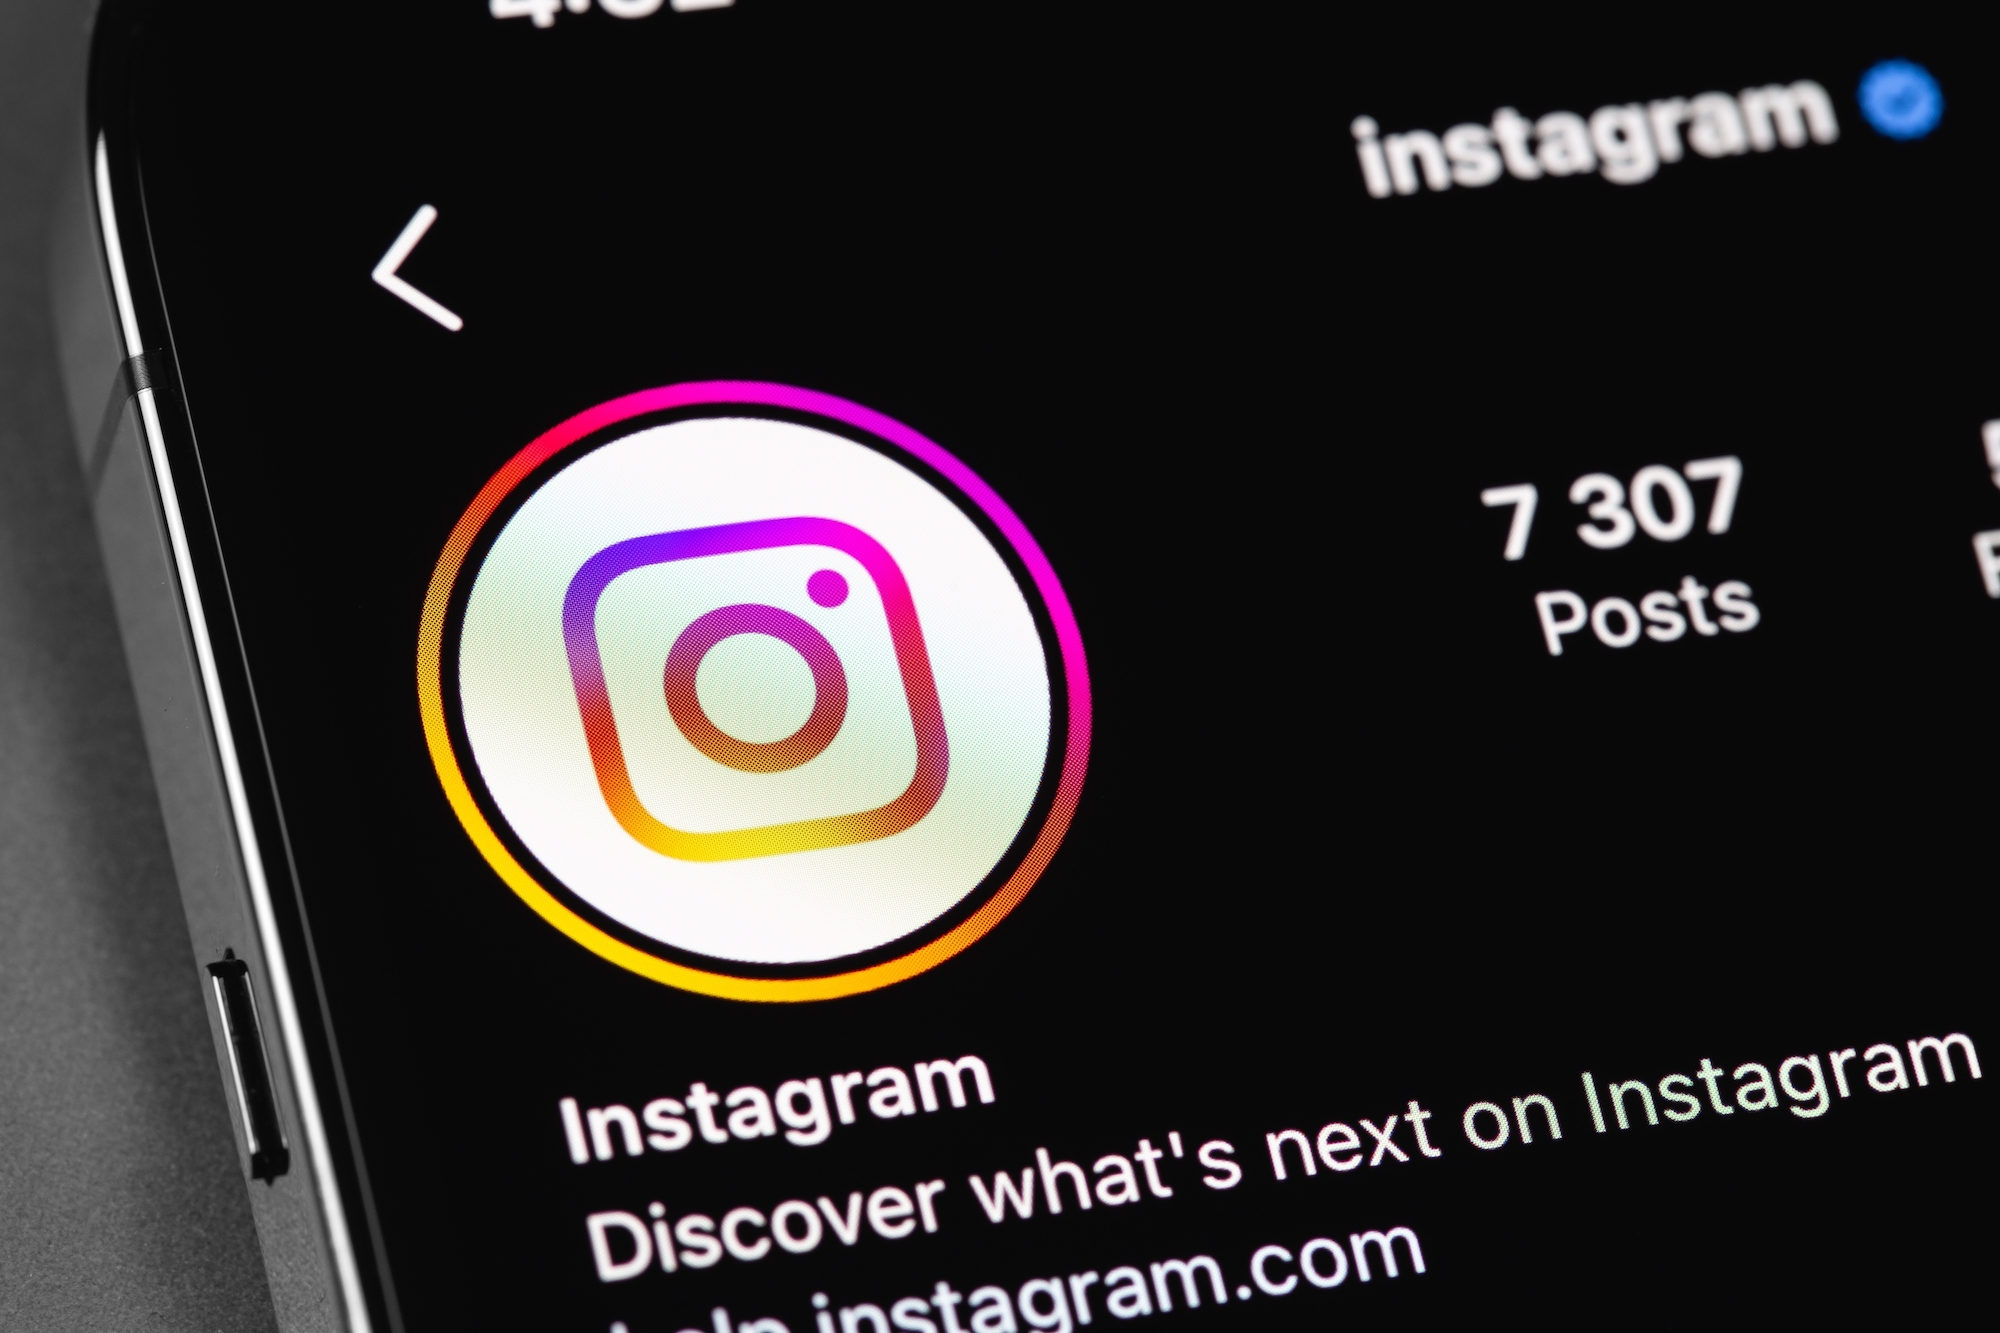 Does Instagram Verification Impact Engagement? [Research]